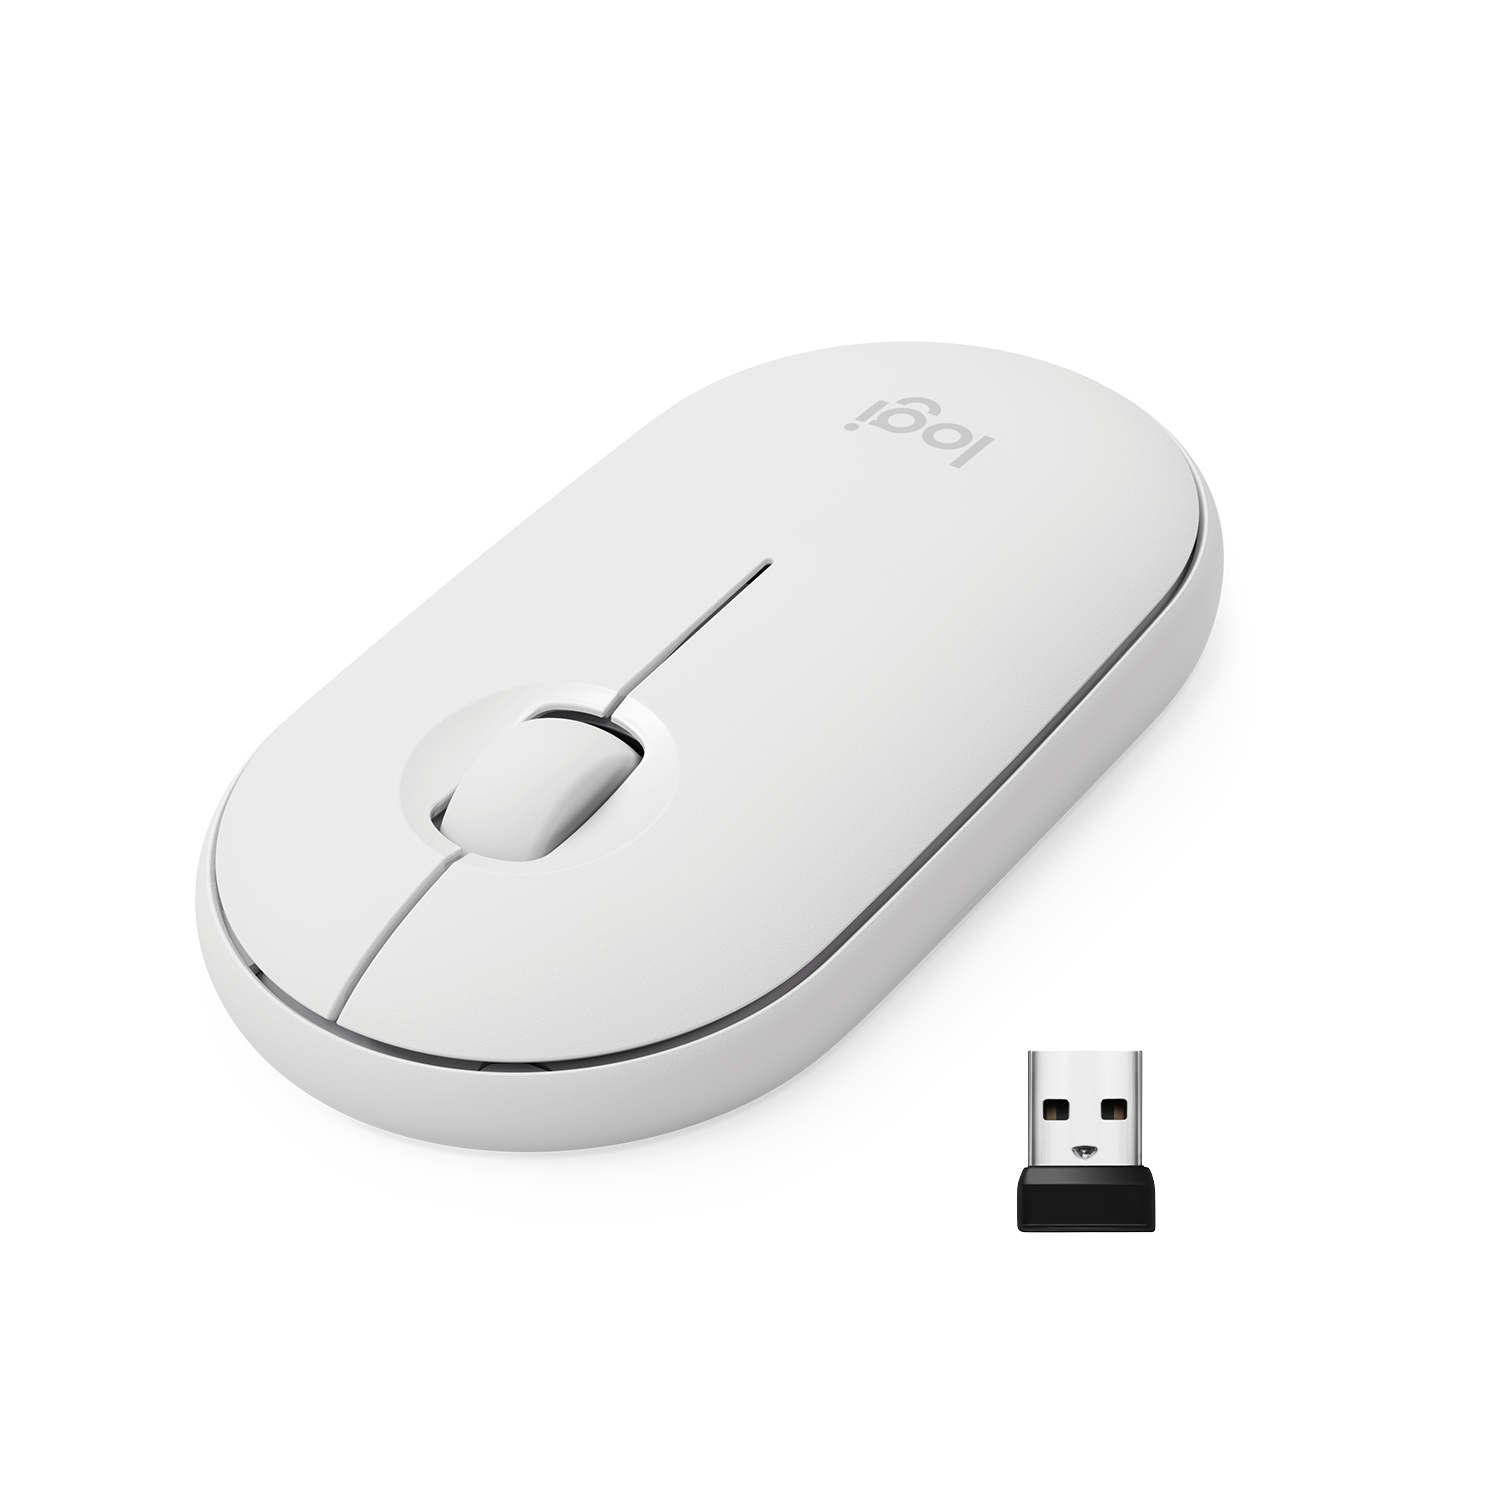 Pebble M350 Wireless Mouse - OFF-WHITE - EMEA